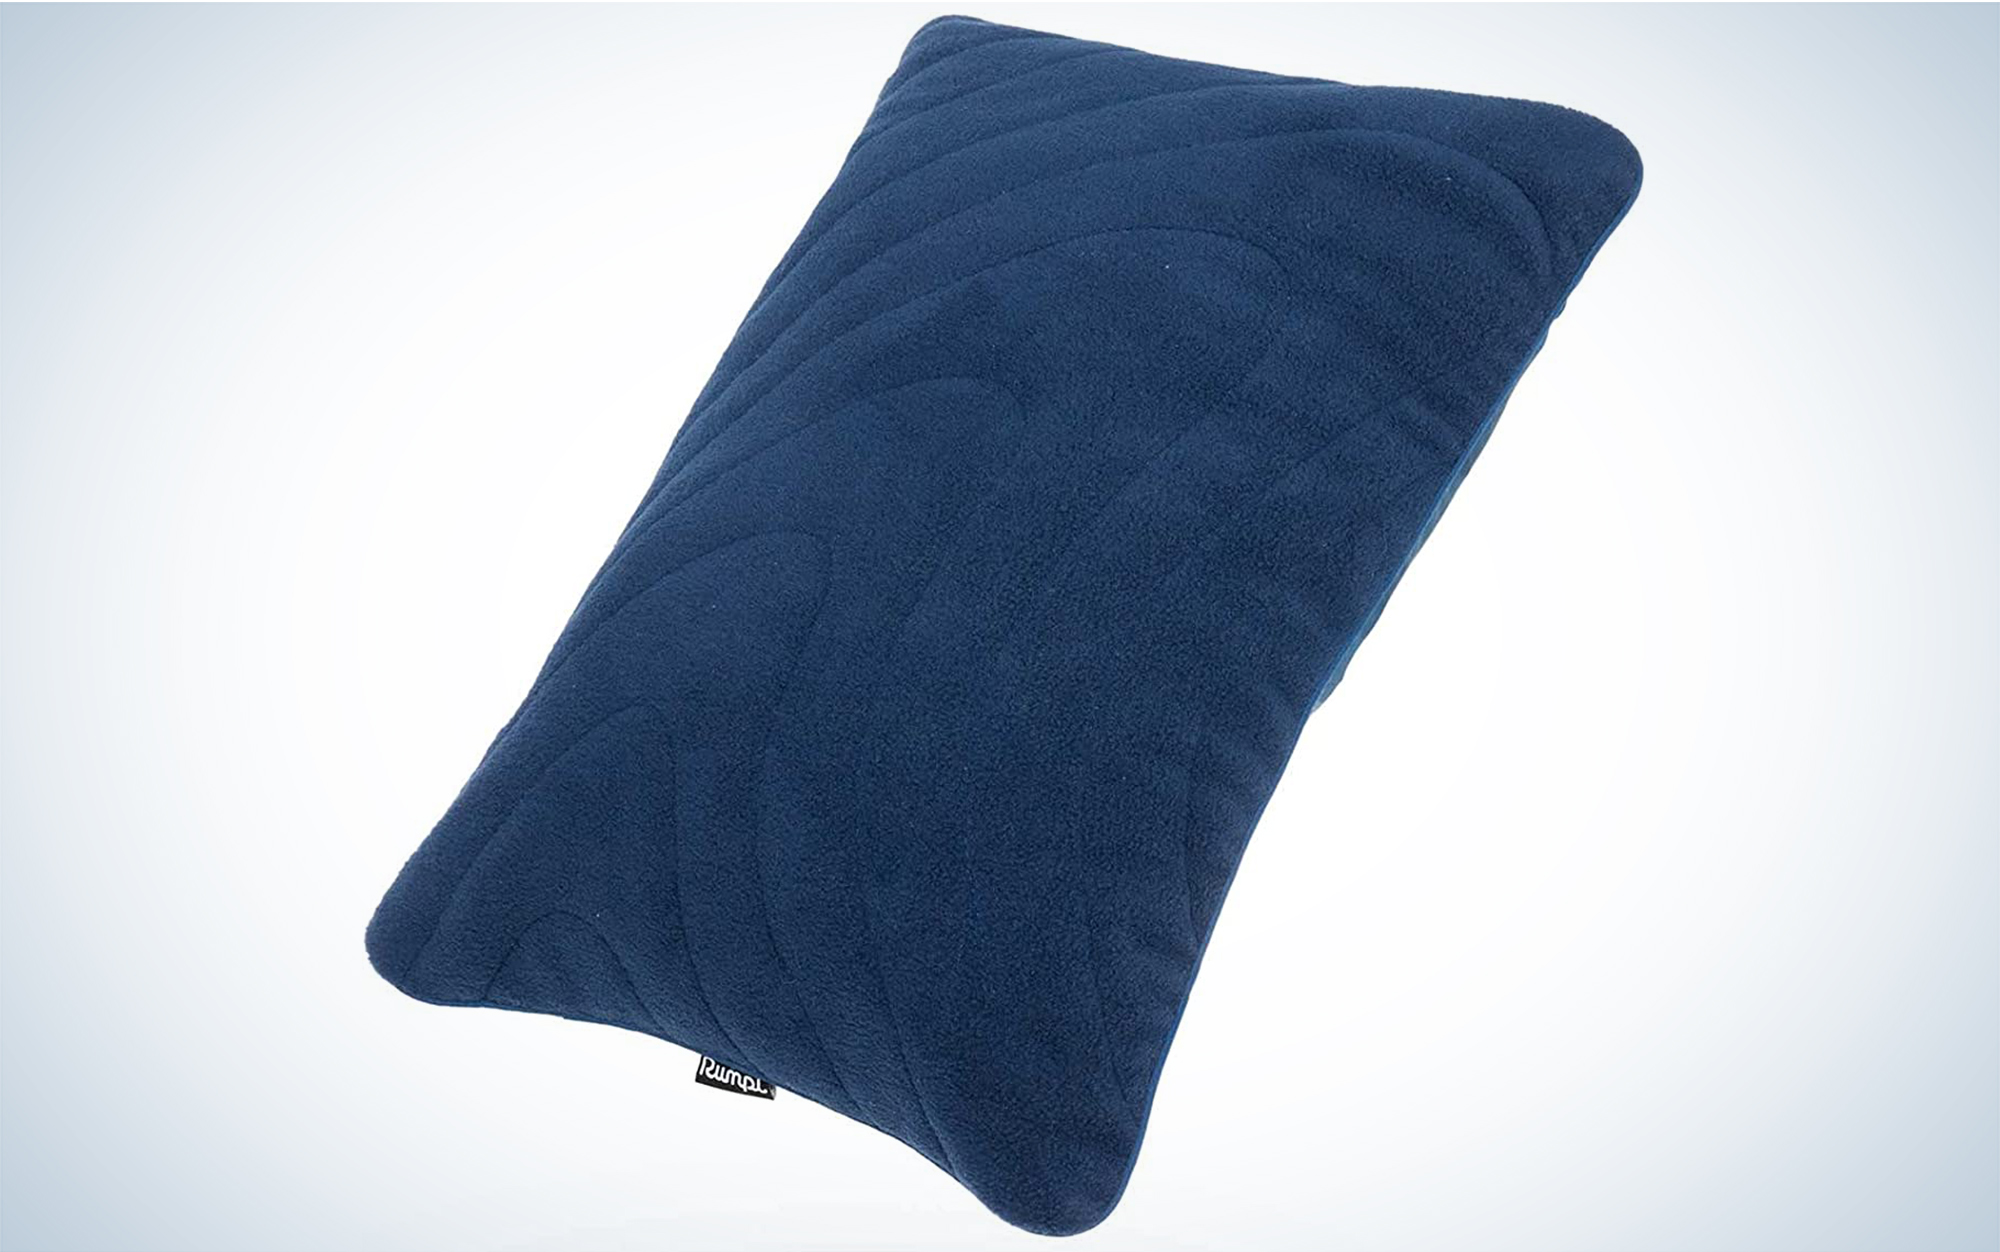 The Rumpl Stuffable Pillowcase is the best pillowcase.